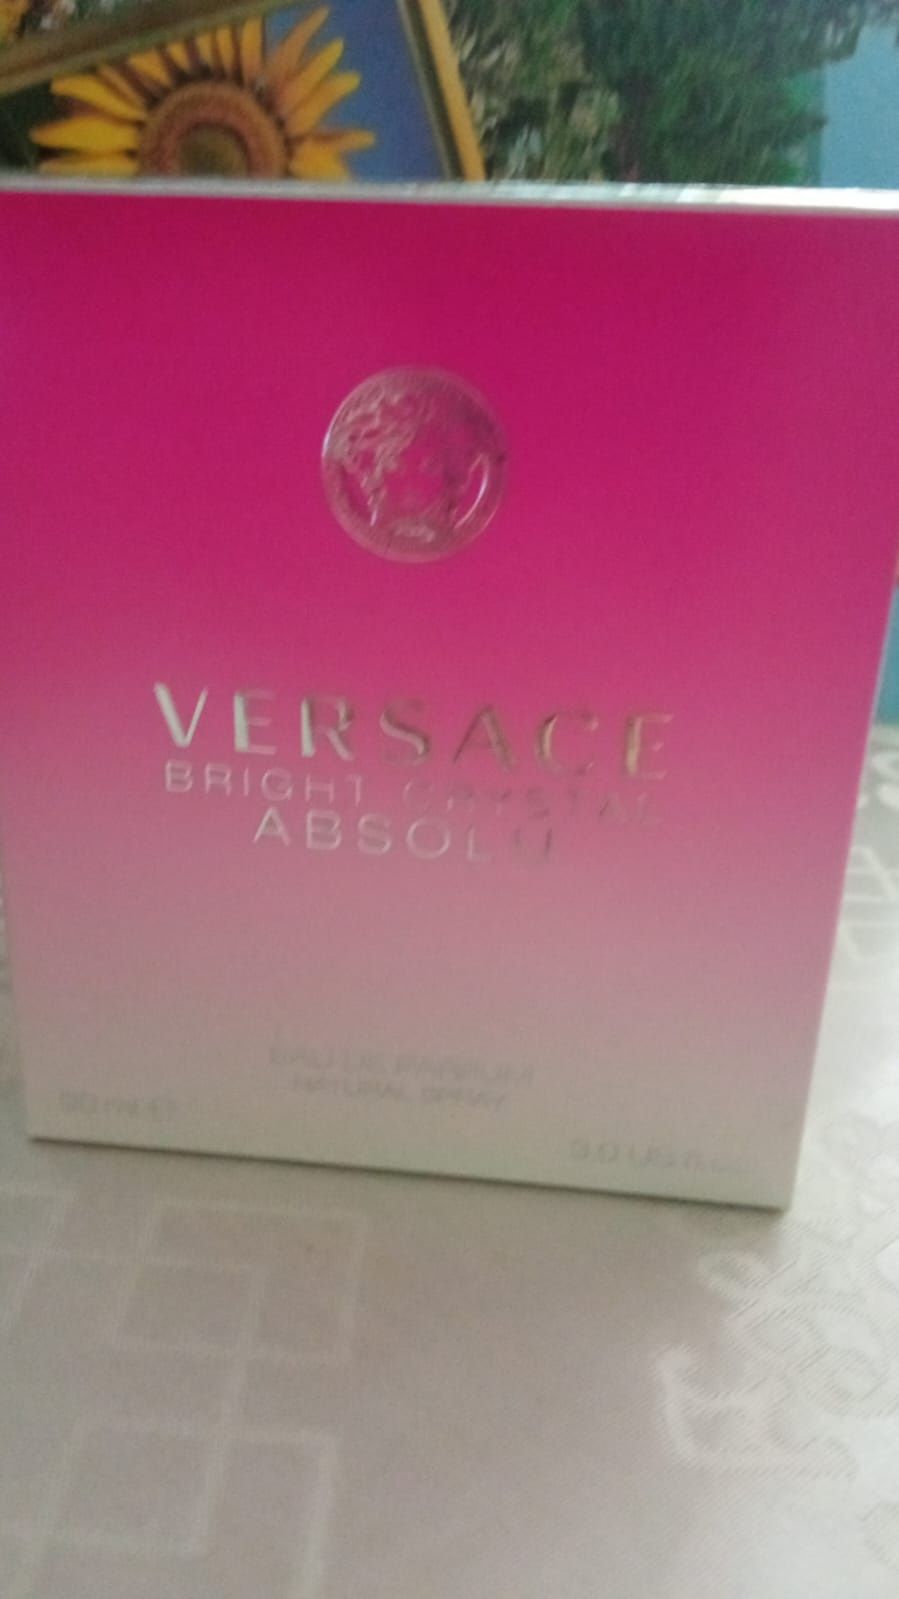 Аромат Versace bright crystal